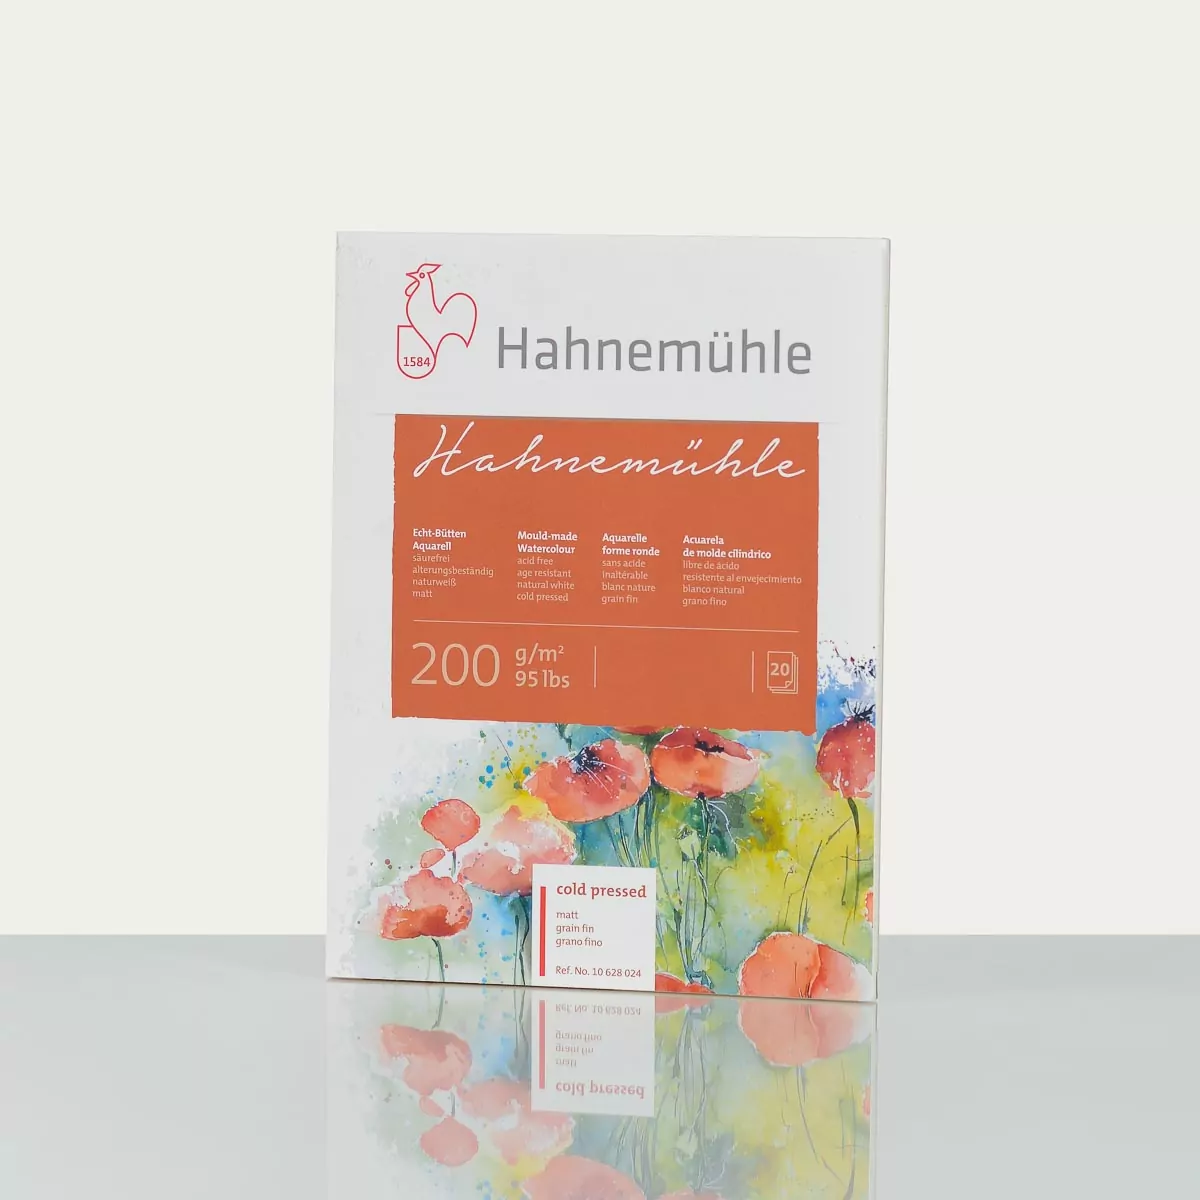 Traditional Hahnemuhle WatercolourBlock “Hahnemuhle” matt 200gsm 17x24cm (20 Sheets)